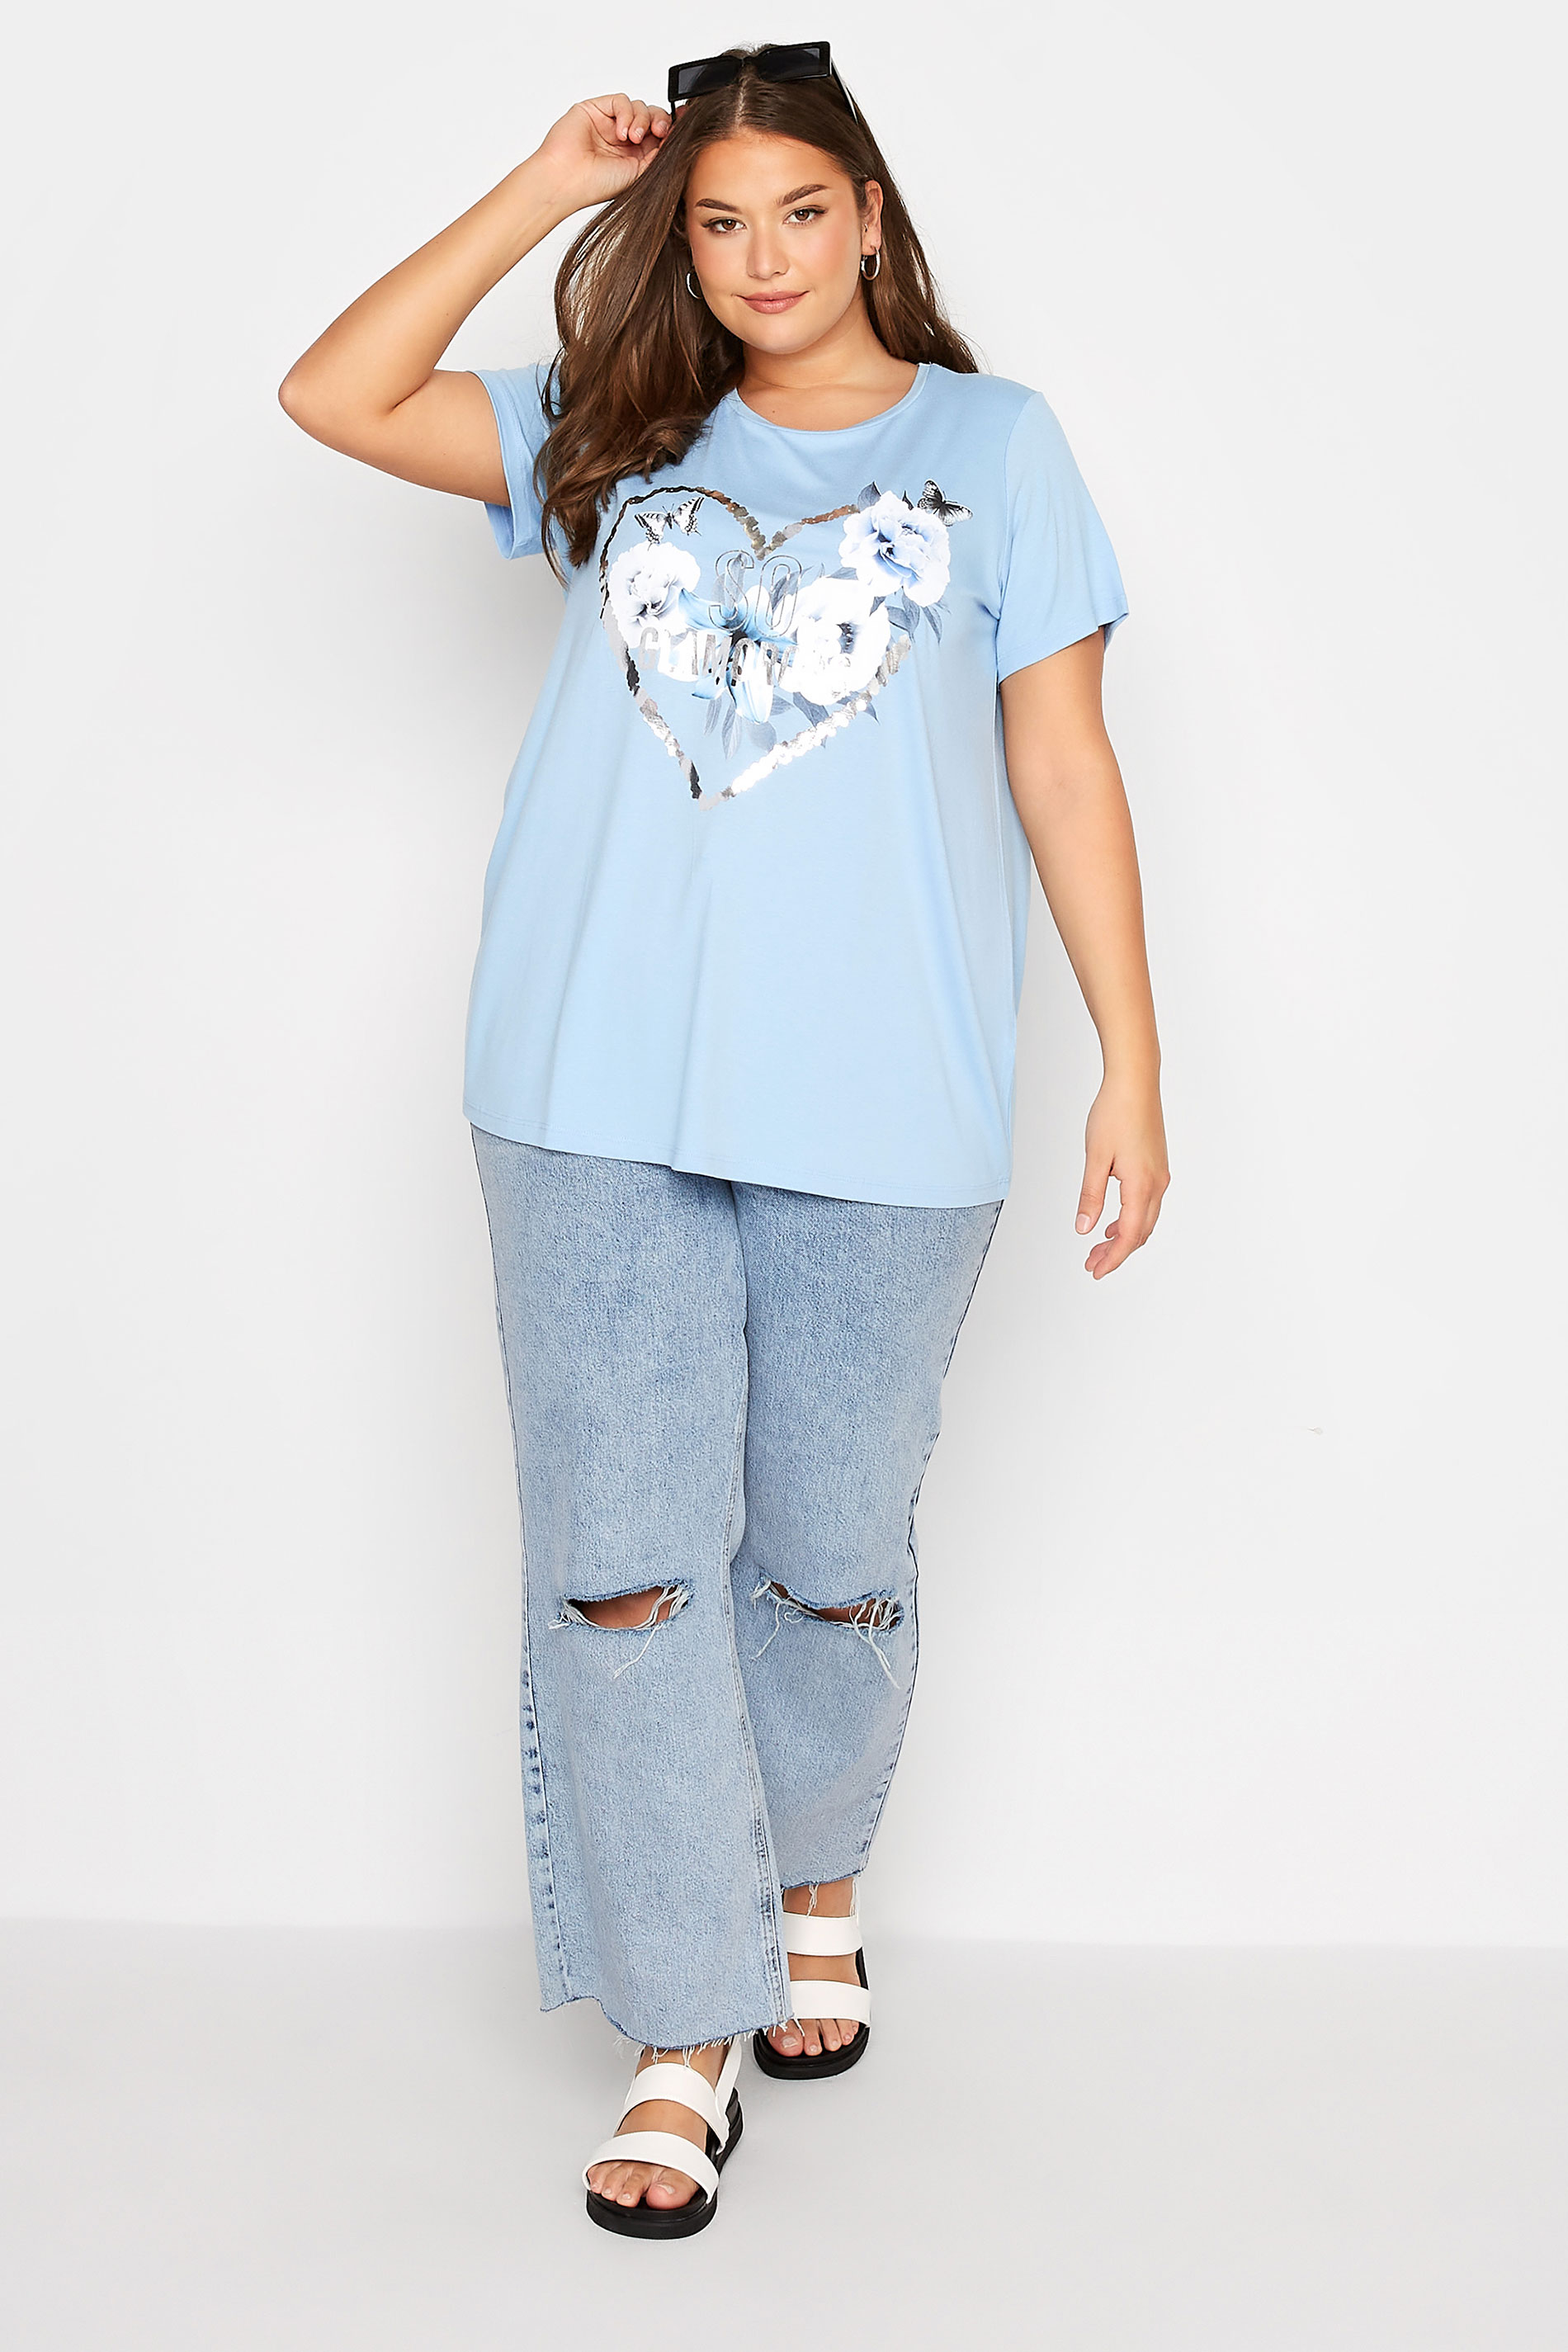 Grande taille  Tops Grande taille  T-Shirts | T-Shirt Bleu Ciel en Jersey 'So Glamorous' - HU87857